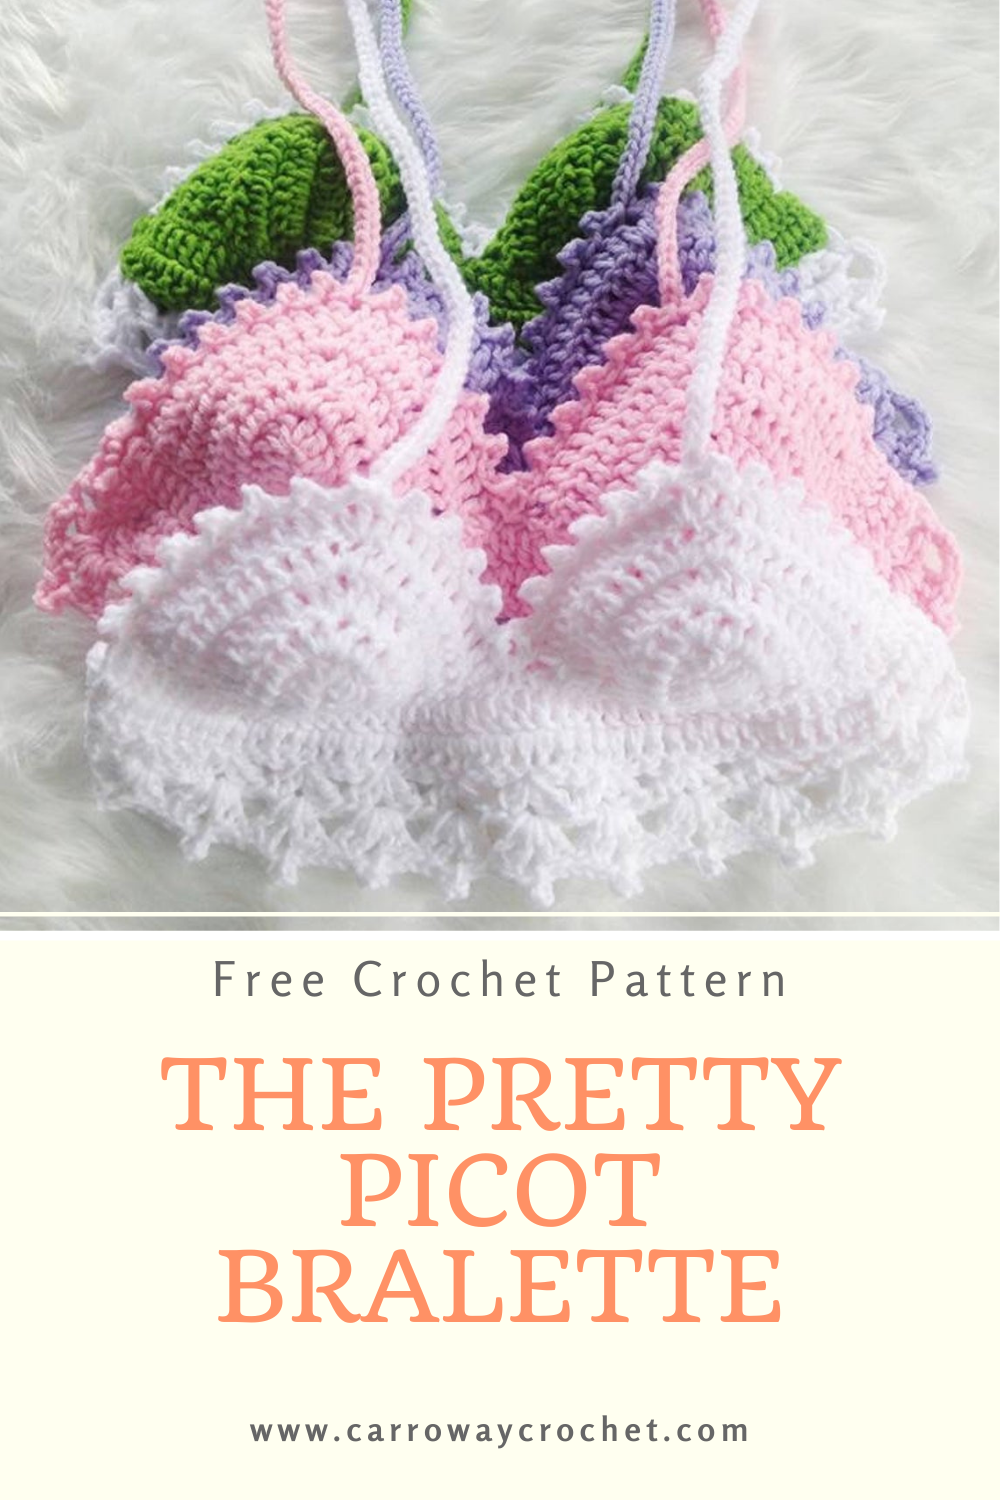 Free Crochet Pattern: The Pretty Picot Bralette - Carroway Crochet